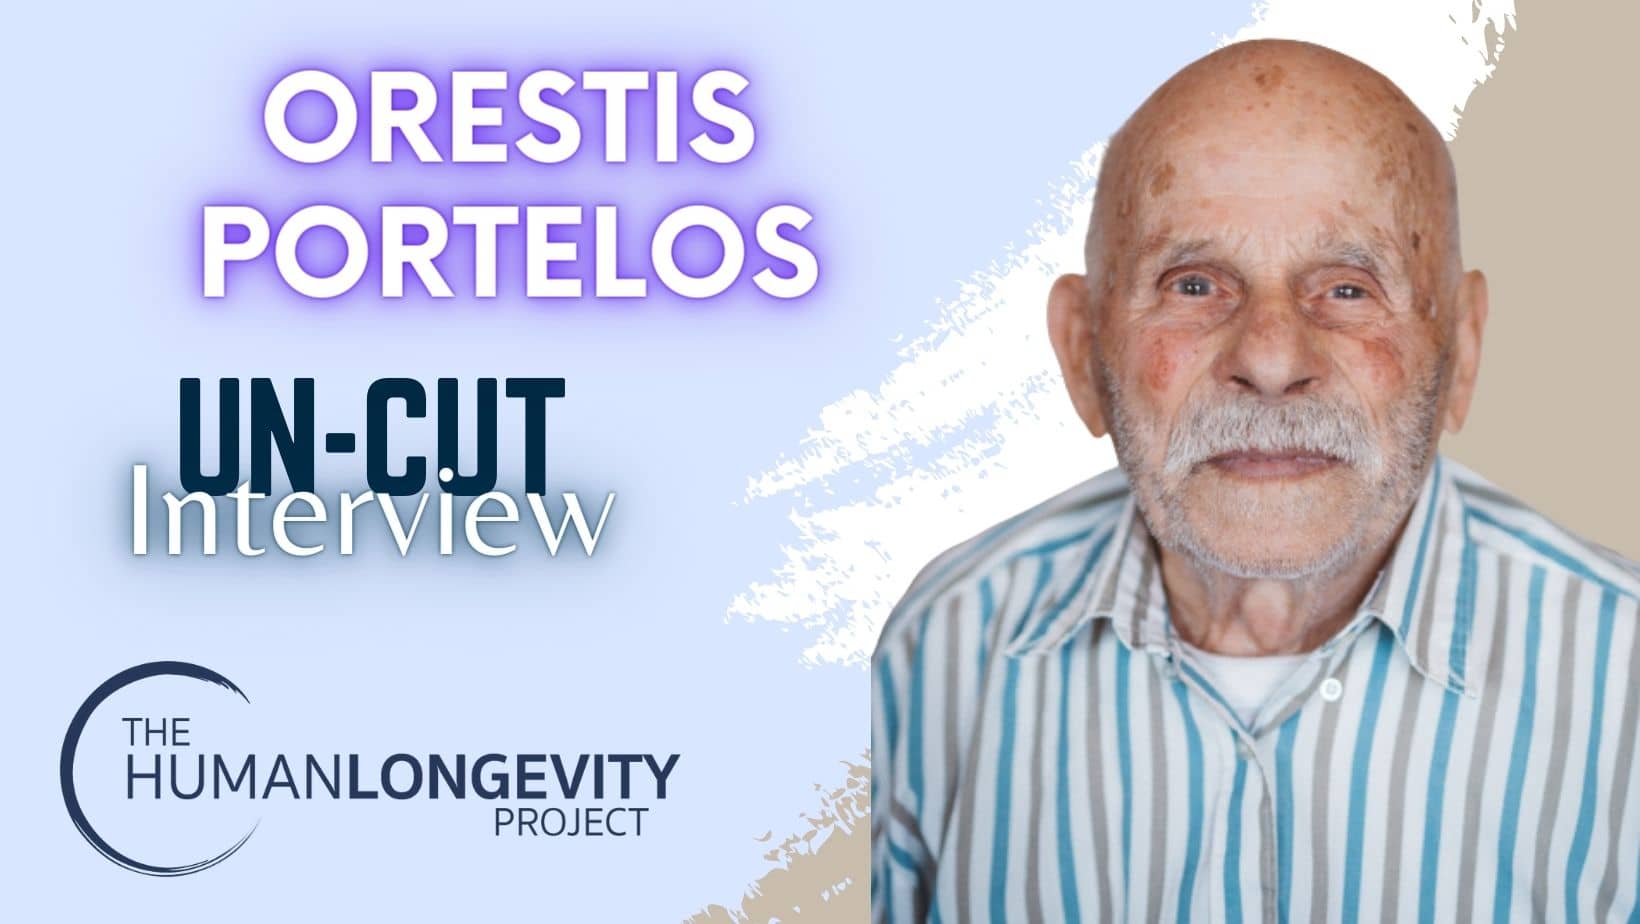 Human Longevity Project Uncut Interview With Orestis Portelos